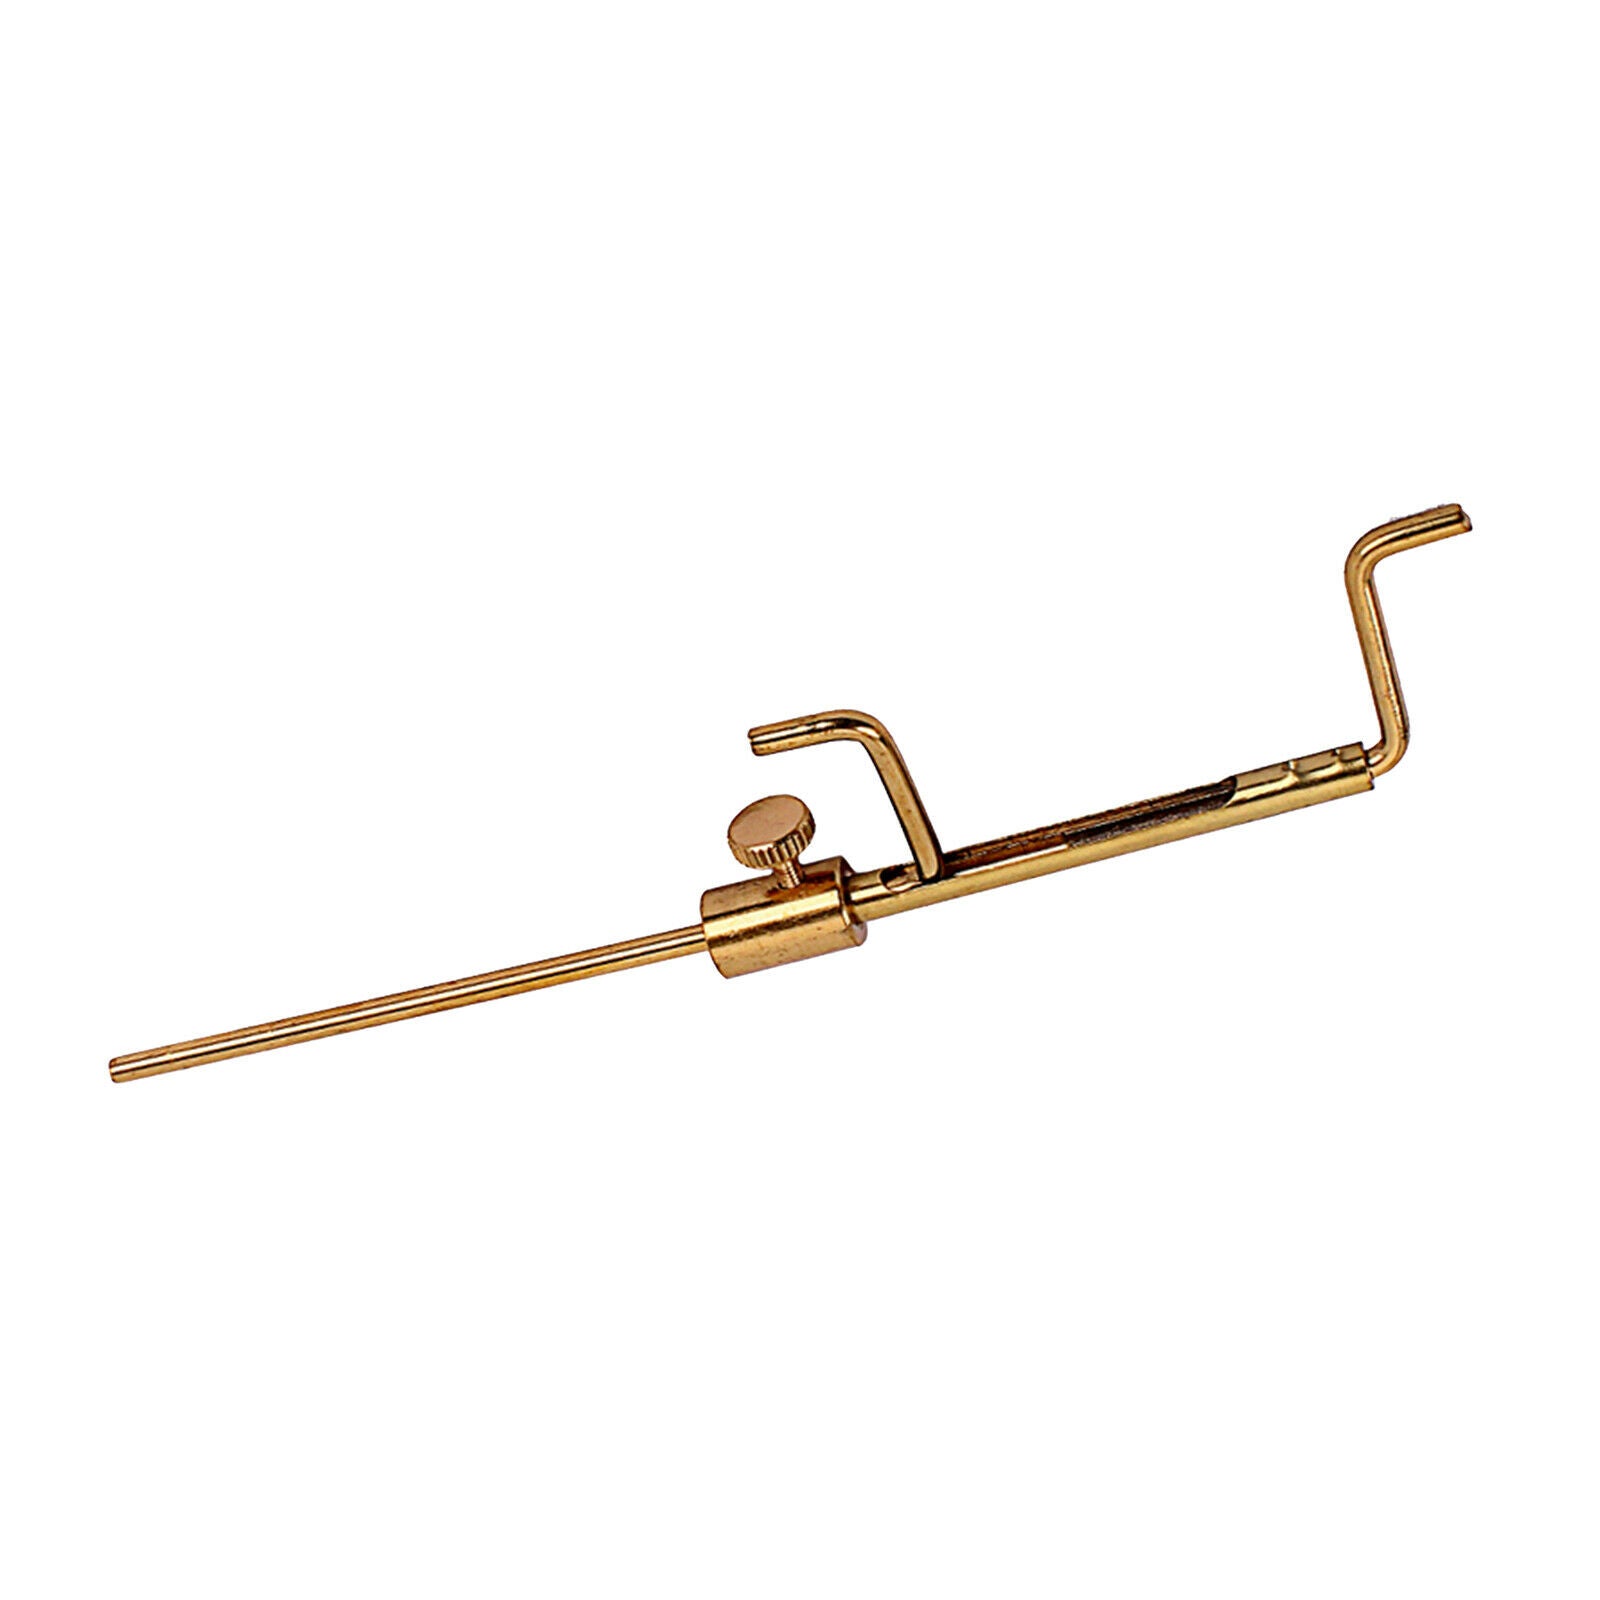 Golden Metal Violins Sound Post Gauge Luthier Install Tools Instrument Accs